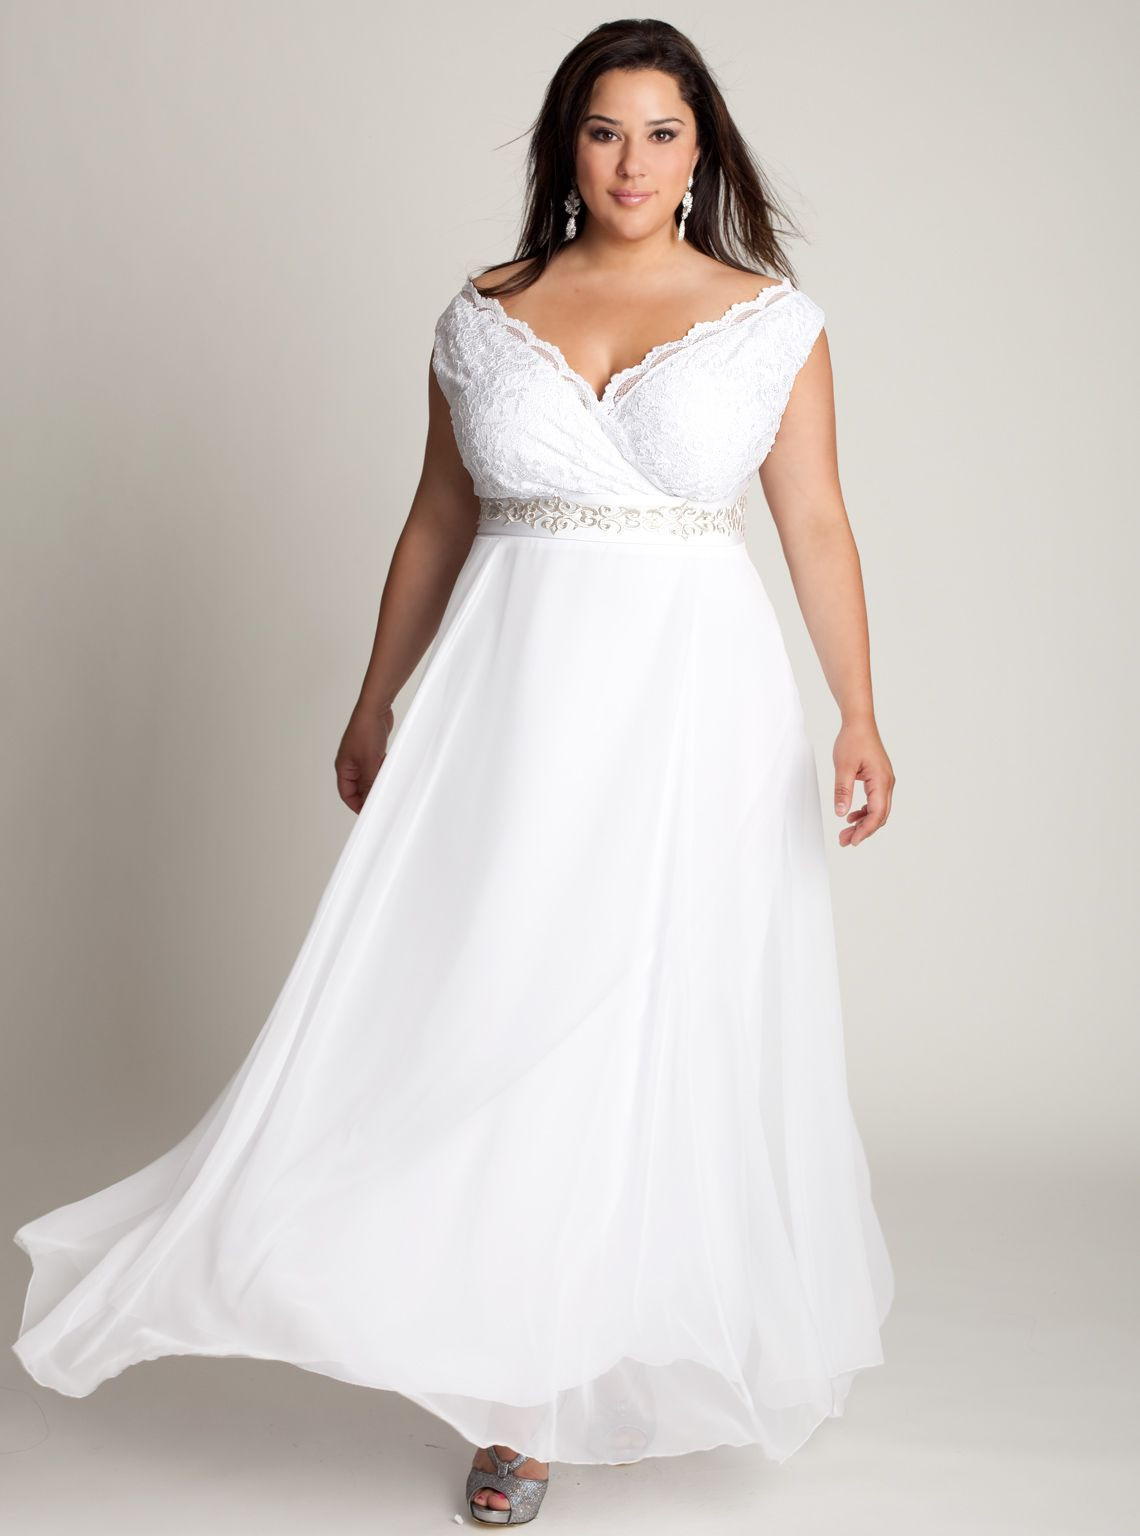 Plus Size Casual Wedding Dresses
 summer outdoor casual wedding dresses for plus size